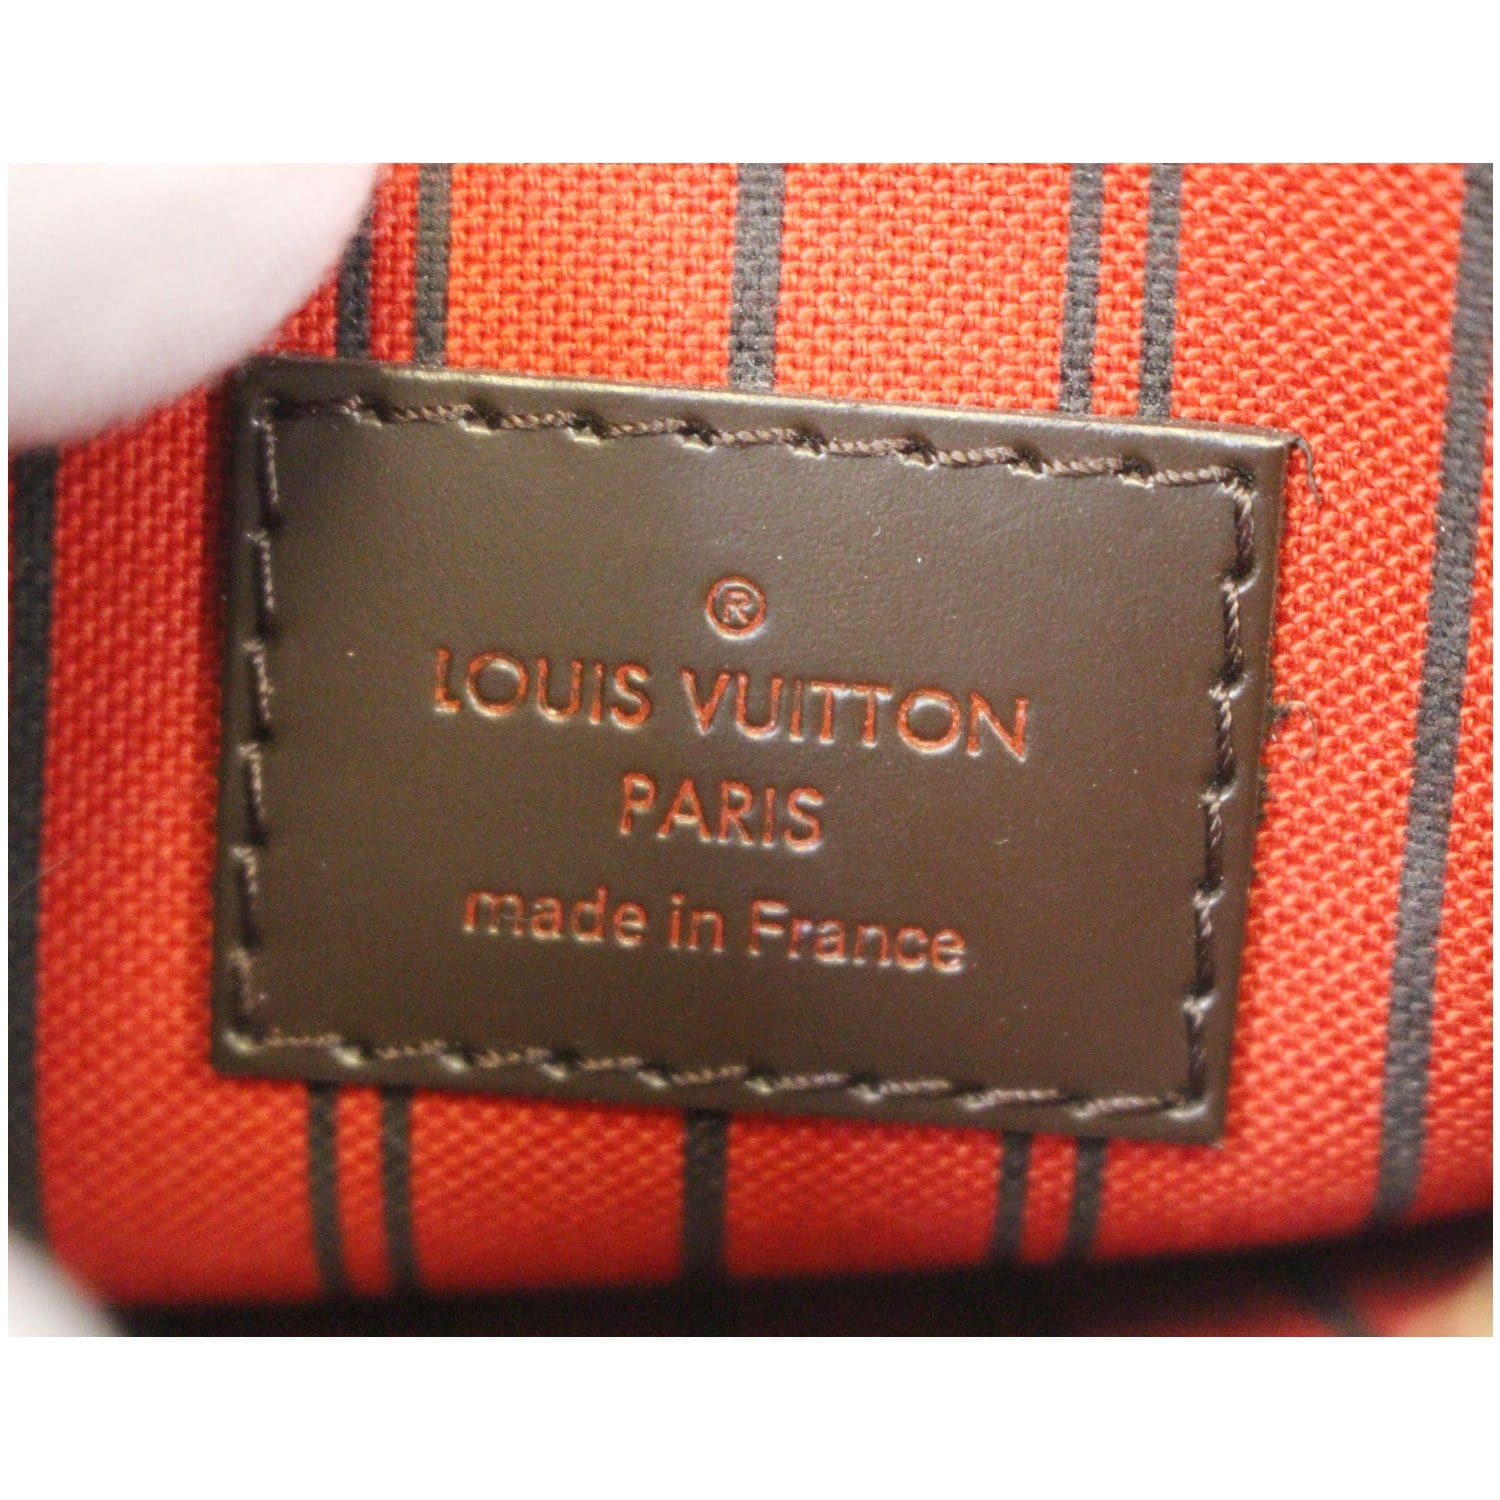 NEVER WORN Louis Vuitton Damier Ebene Neverfull PM with Pochette